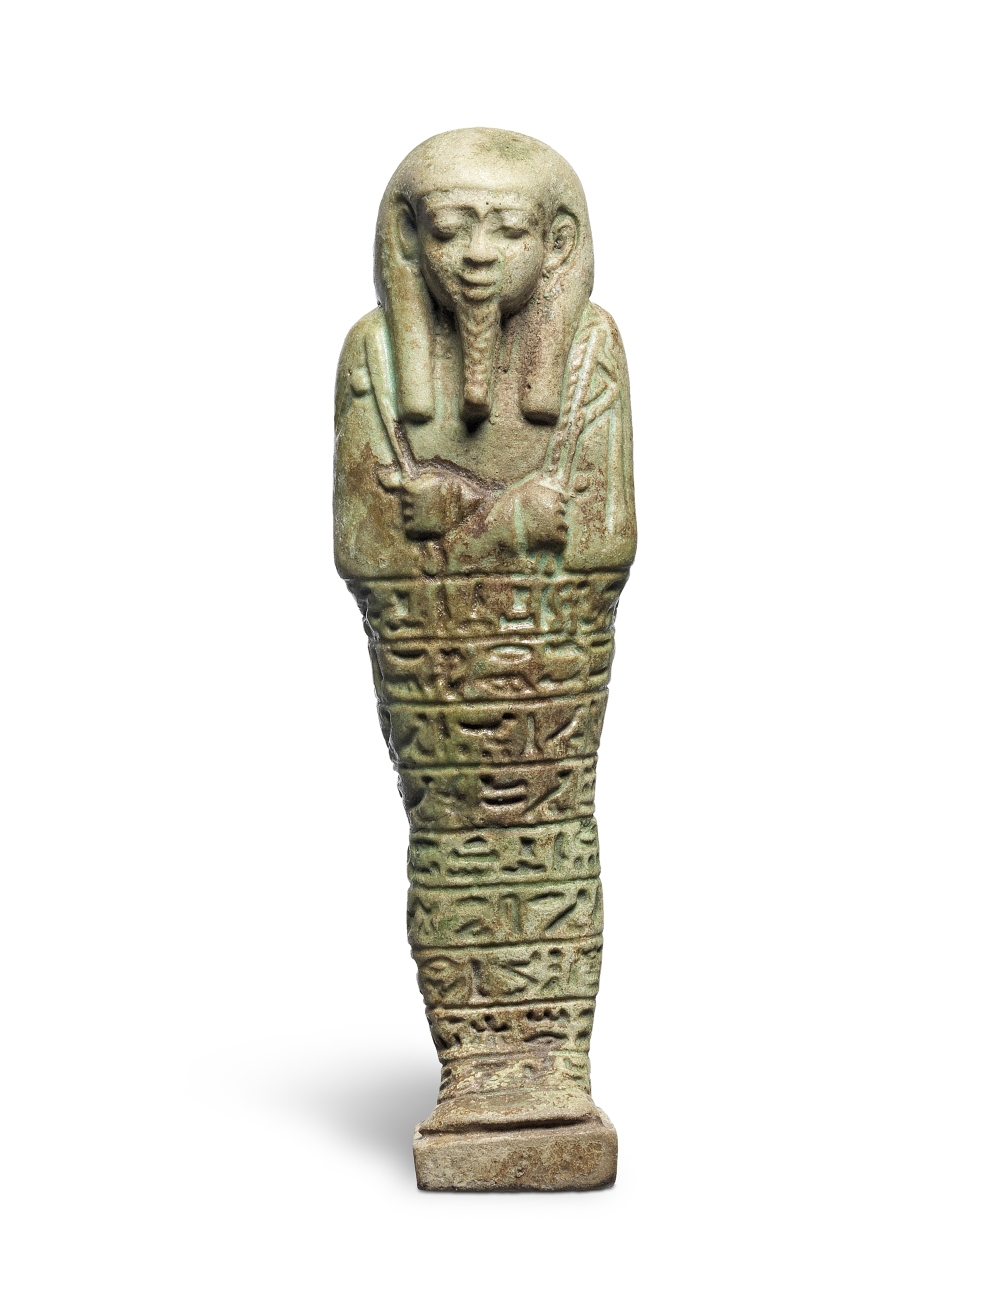 An Egyptian green glazed faience shabti for Ankh-Sma-Tawy